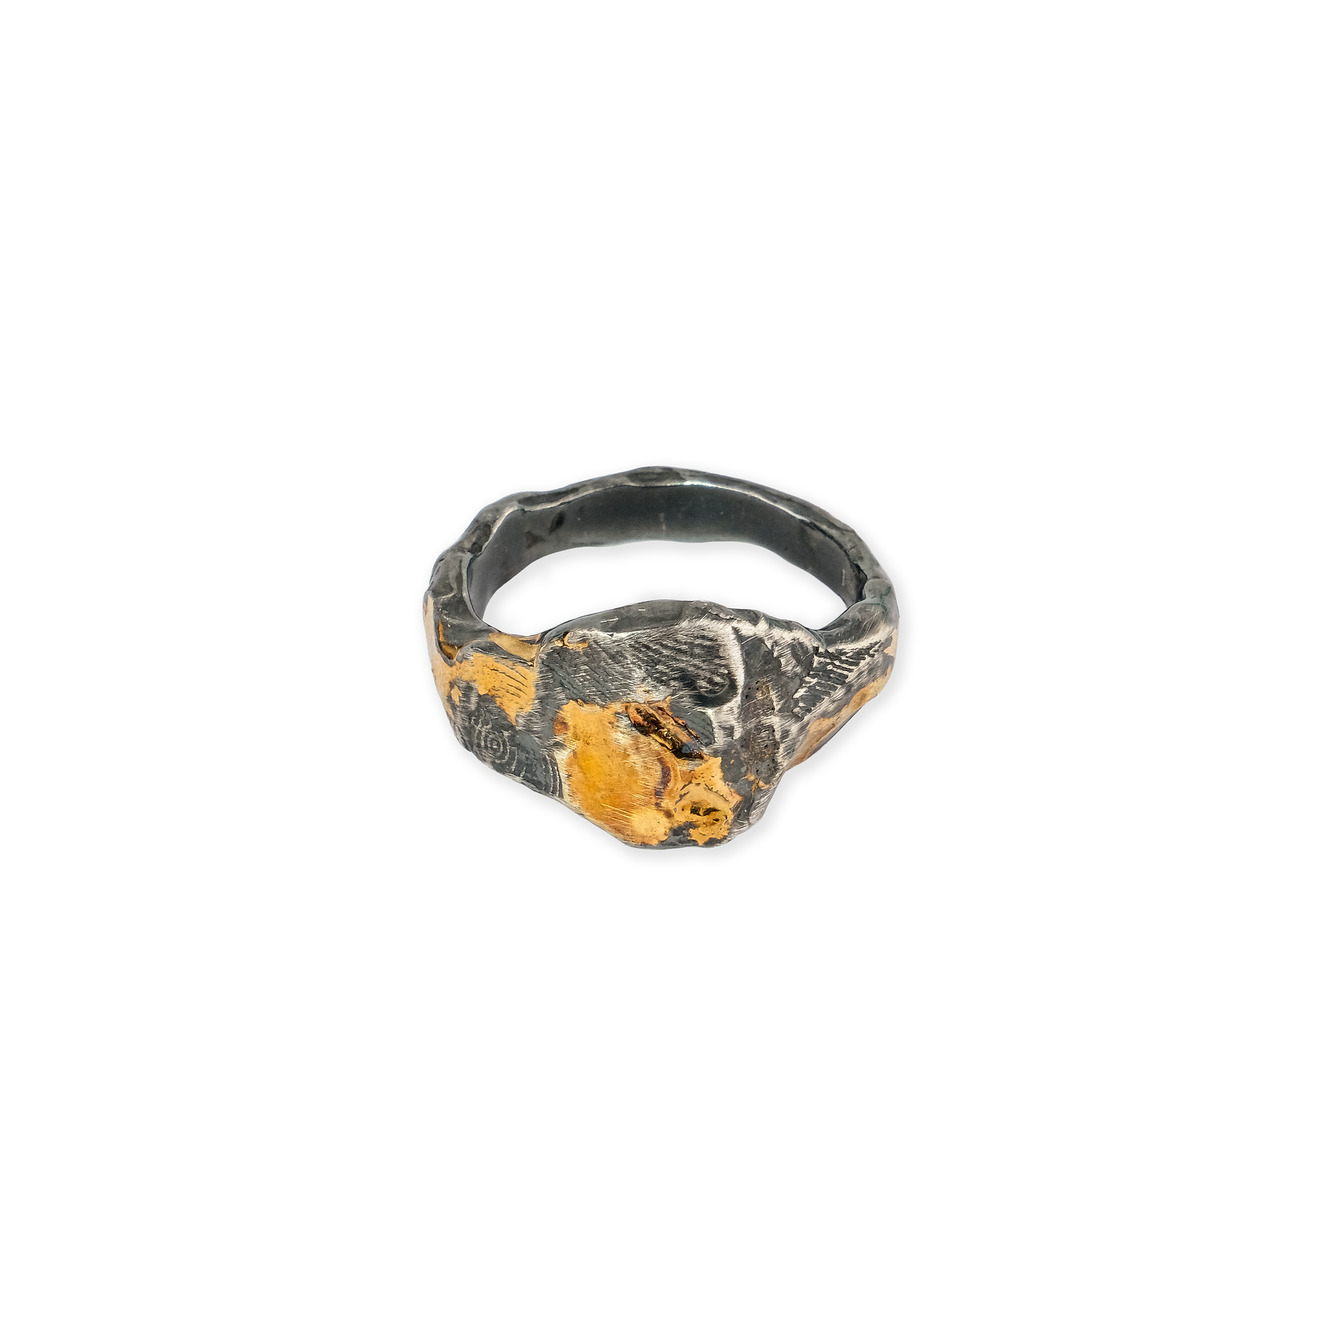 Kintsugi Jewelry Кольцо Hope из серебра с позолотой кольцо бабочки с перидотами сапфирами и цаворитами из серебра с позолотой